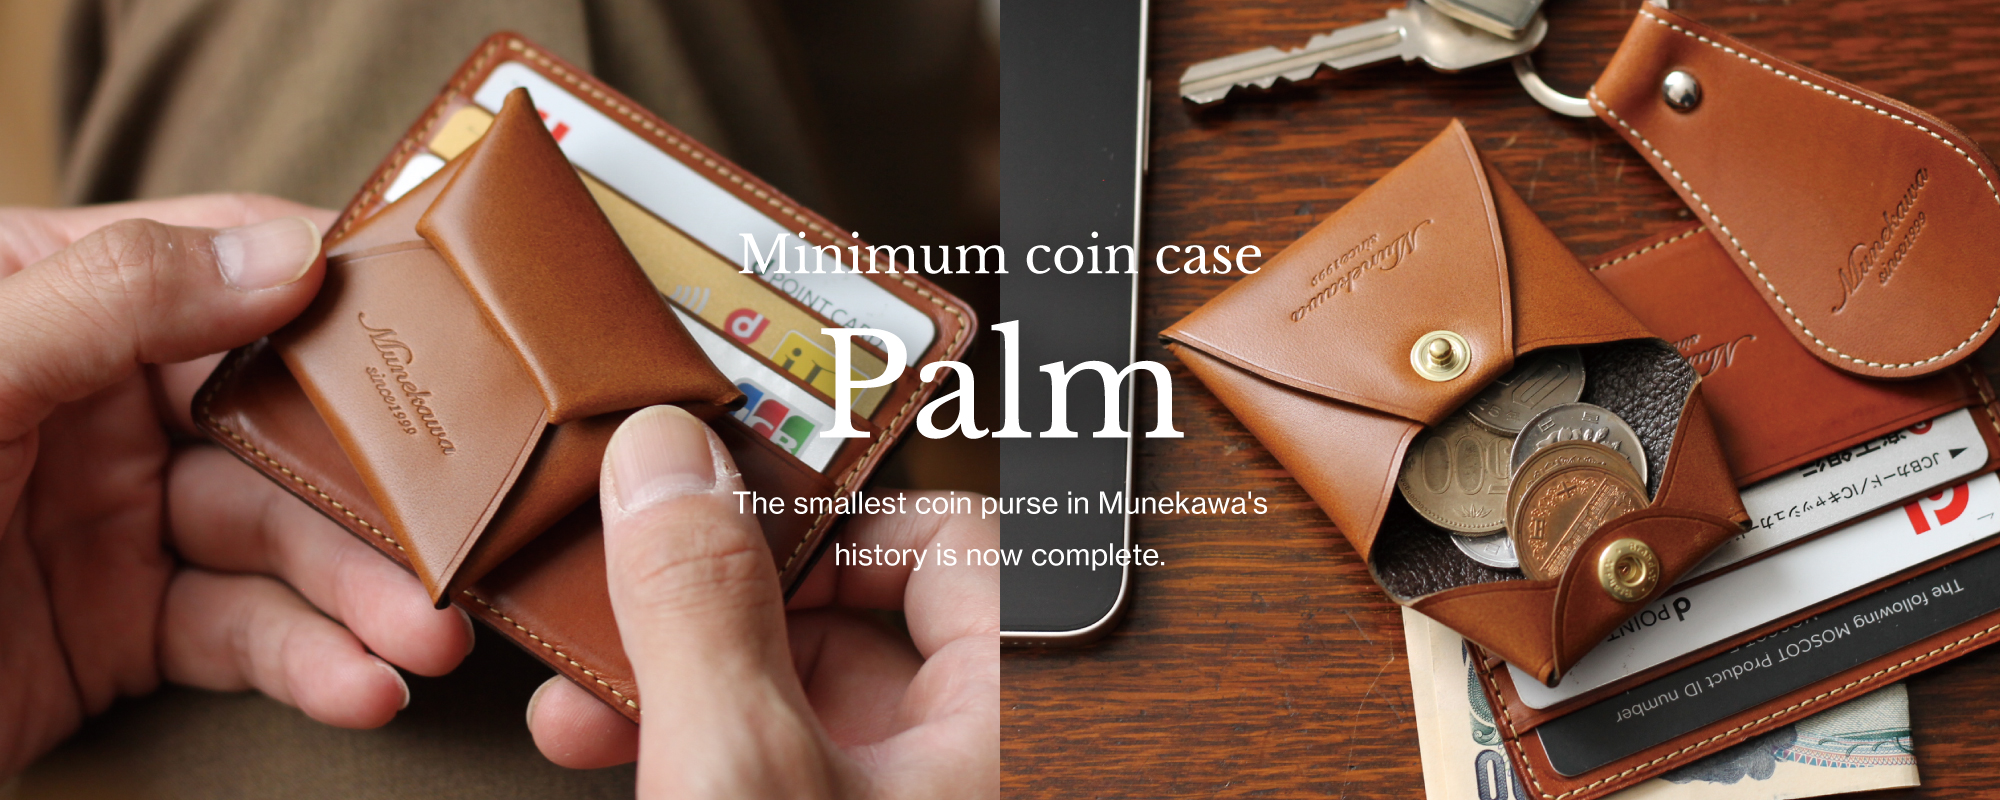 Munekawa 史上最小!新作コインケース「Palm」のpc特集ページ